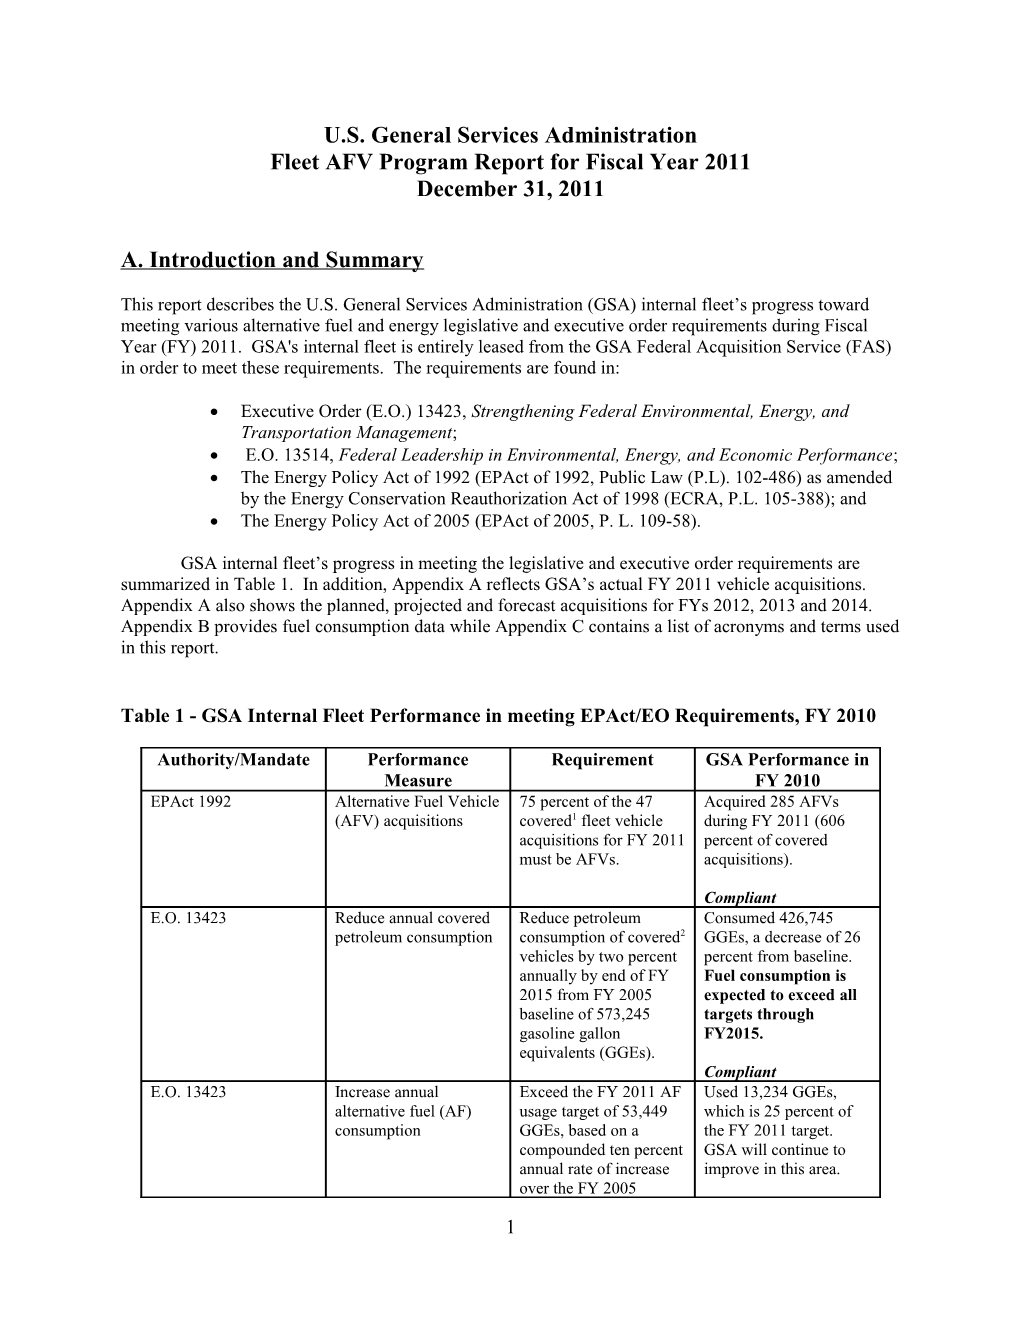 Fleet AFV Program Report for Fiscal Year 2011